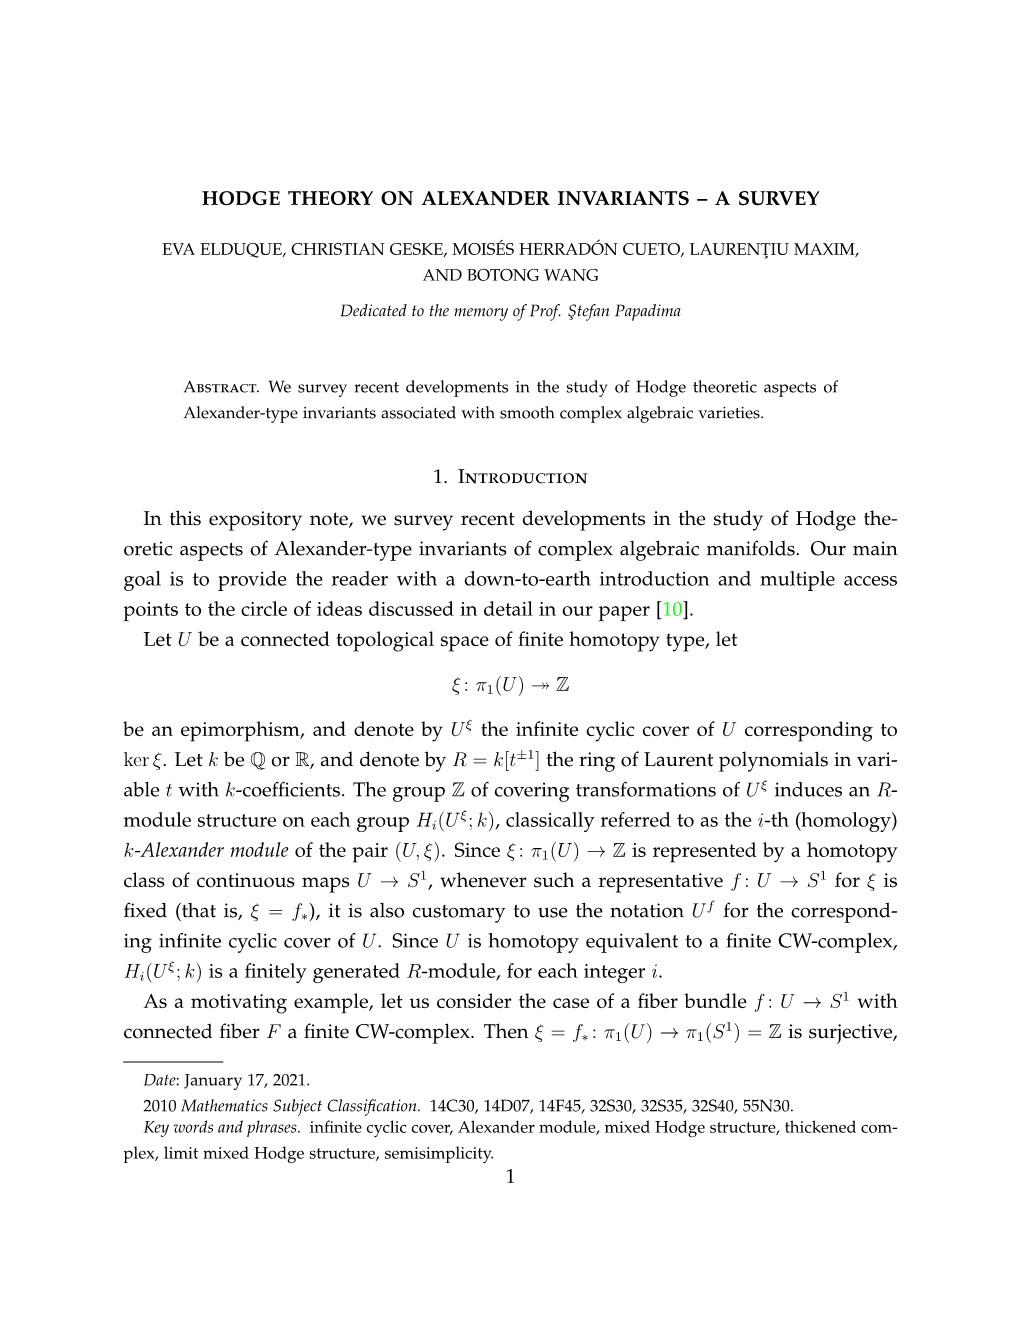 Hodge Theory on Alexander Invariants – a Survey 1